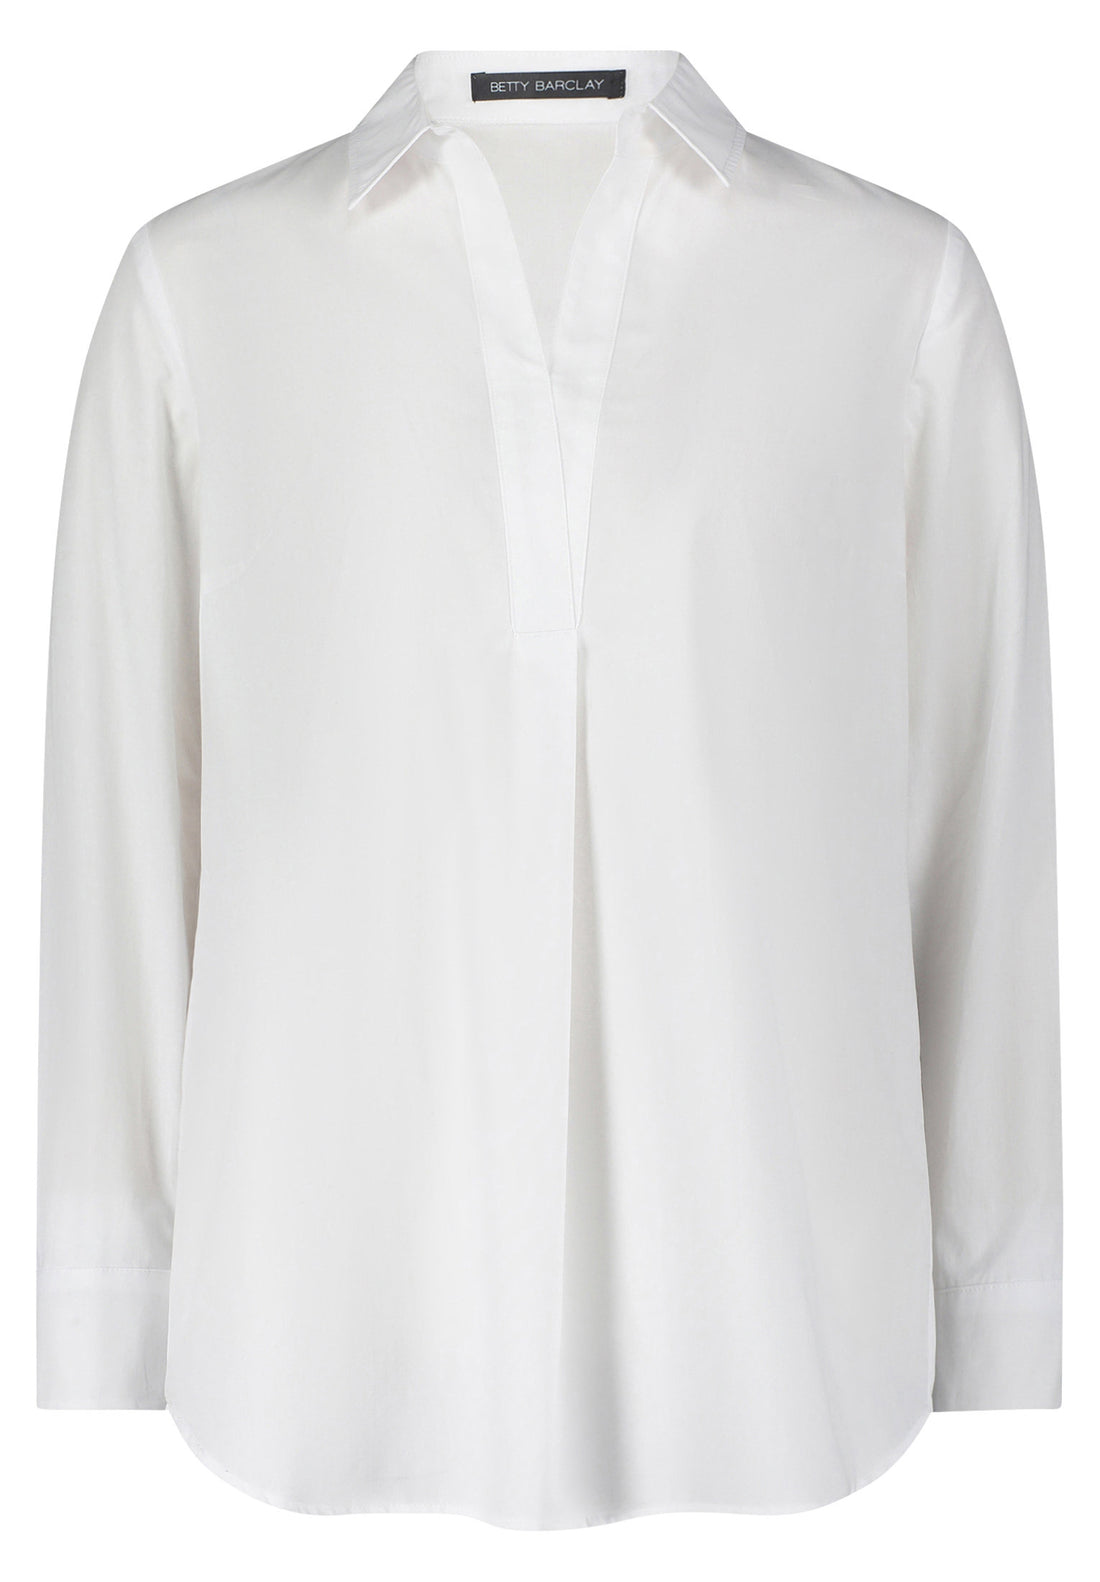 White Shirt Style Blouse_8631-1094_1000_01